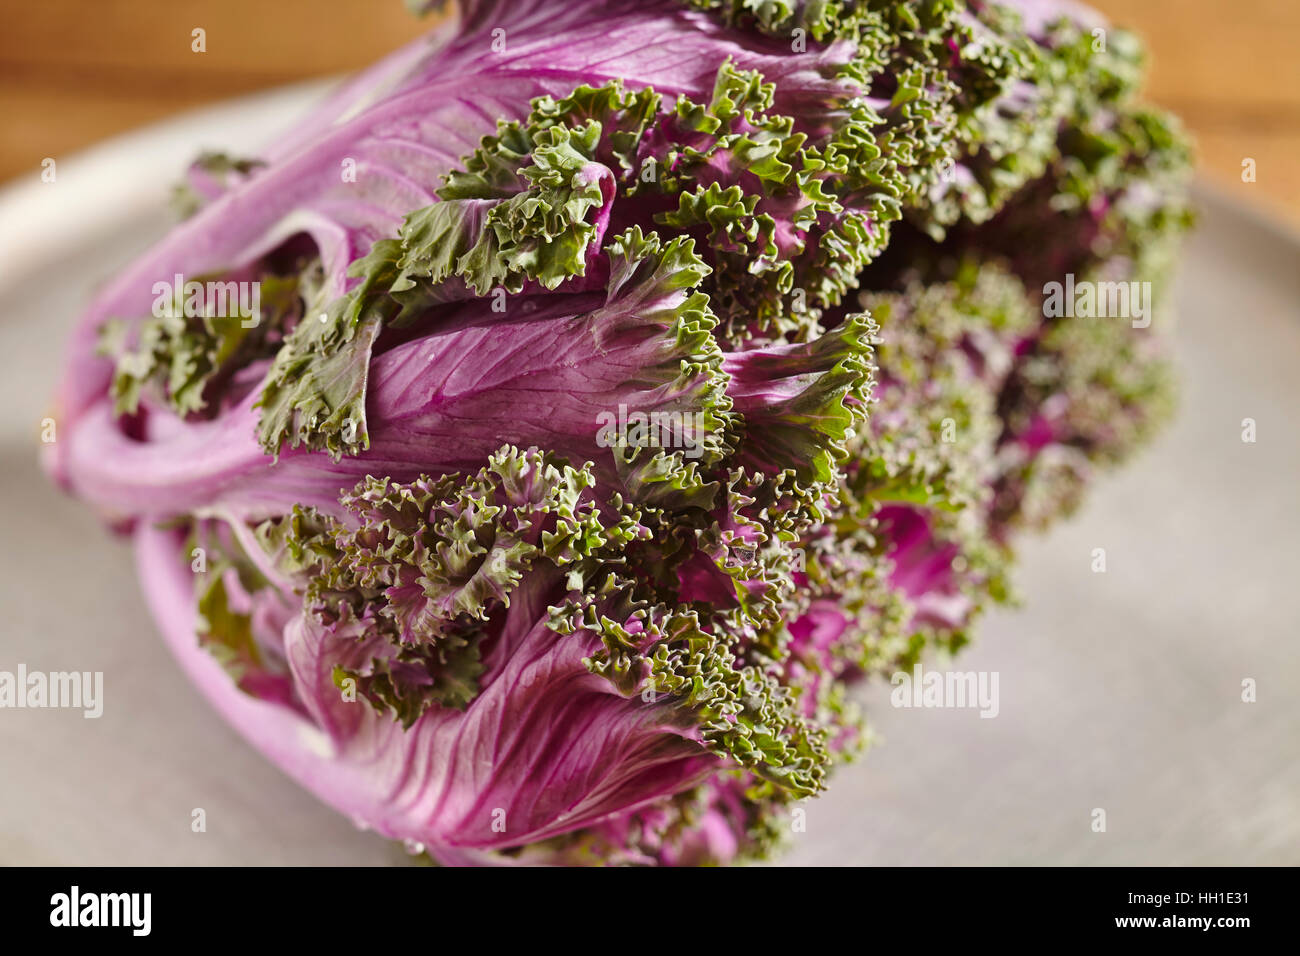 Rohe, frische lila Kohl, eine saisonale Wintergemüse Stockfoto